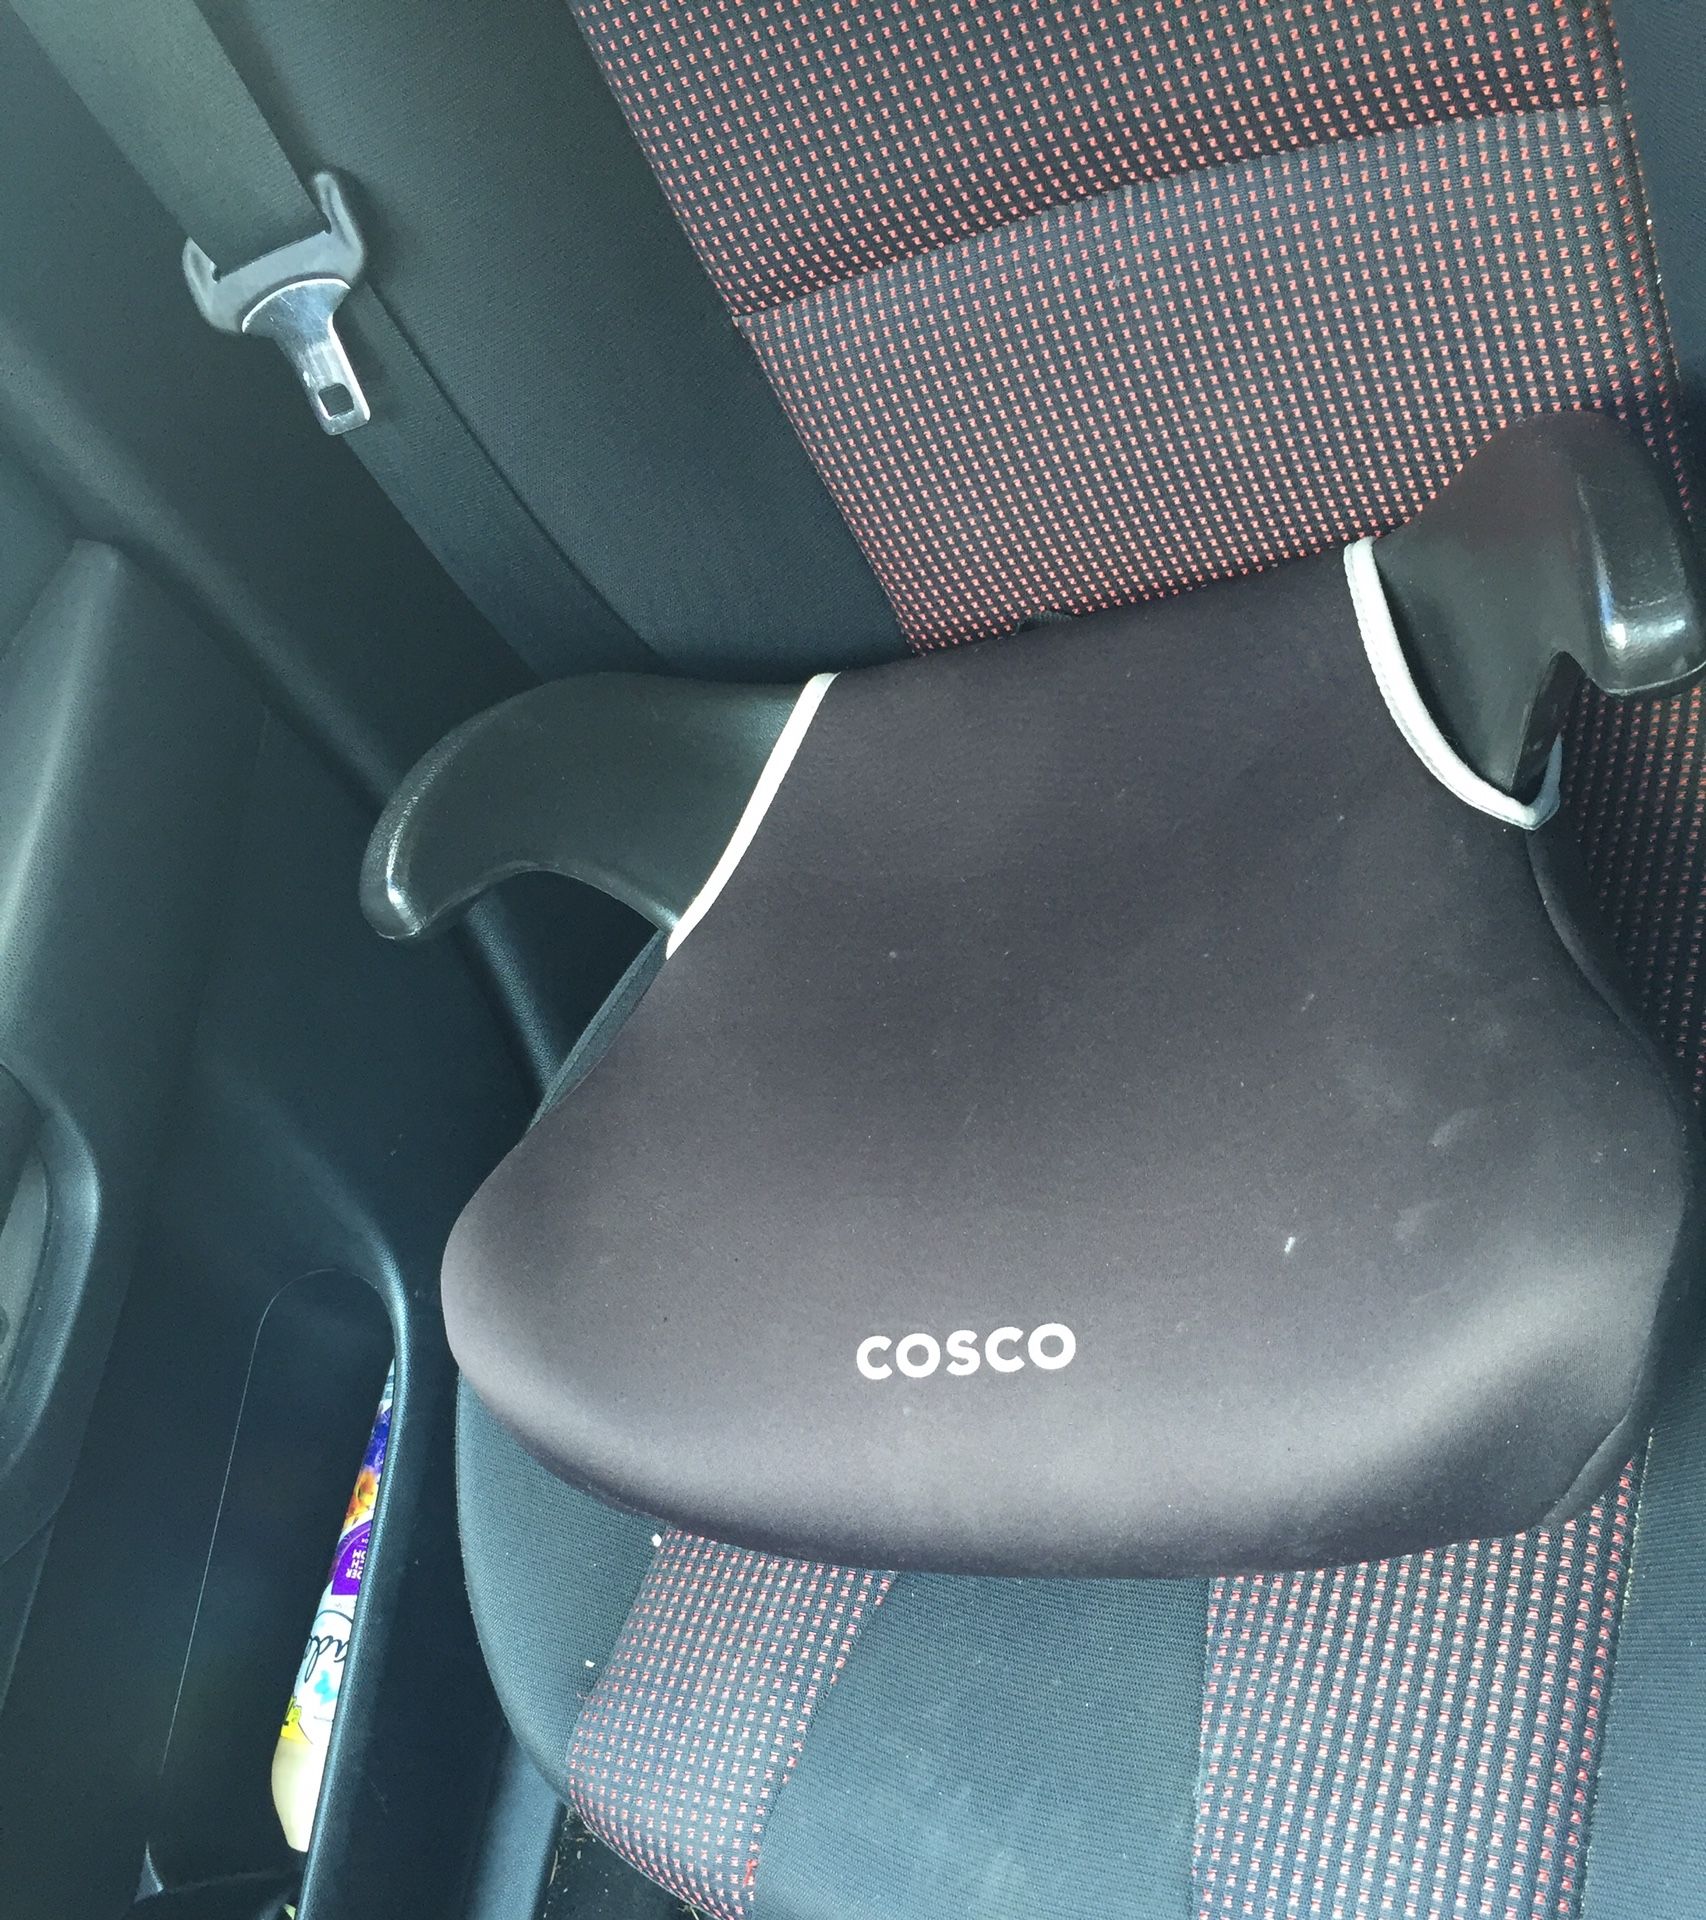 Booster car seat